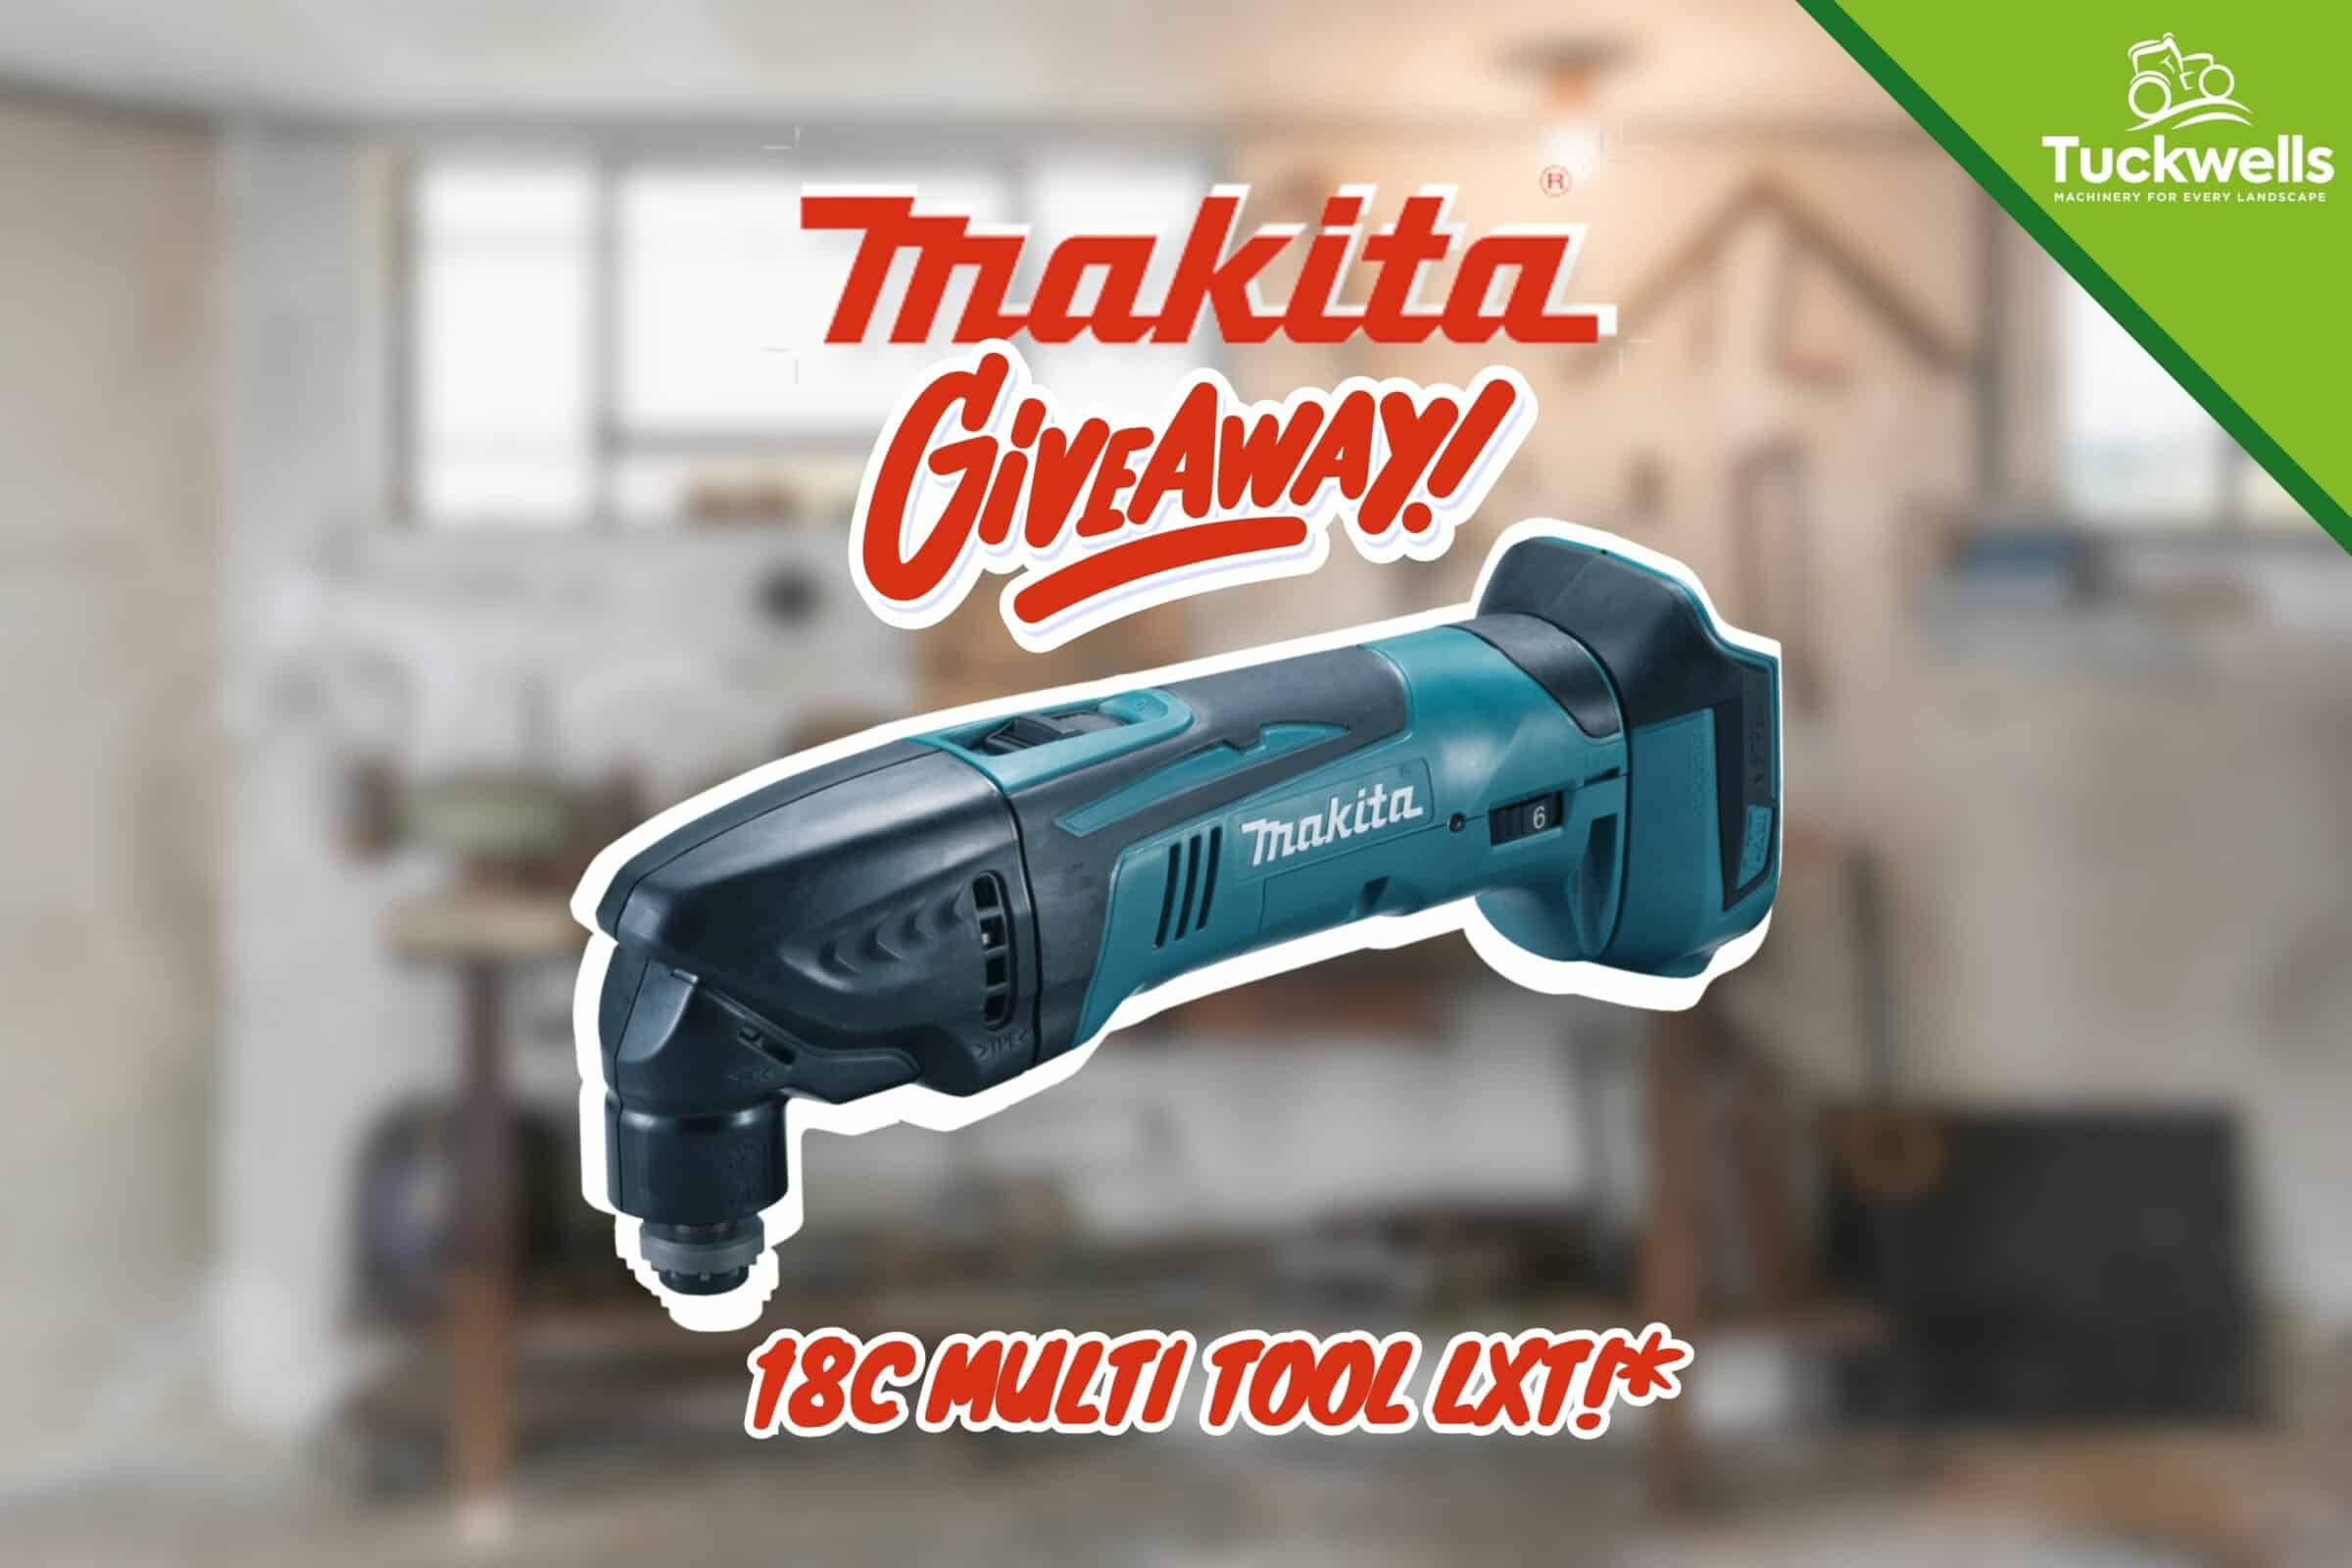 Makita 18c Multi-Tool LXT Giveaway